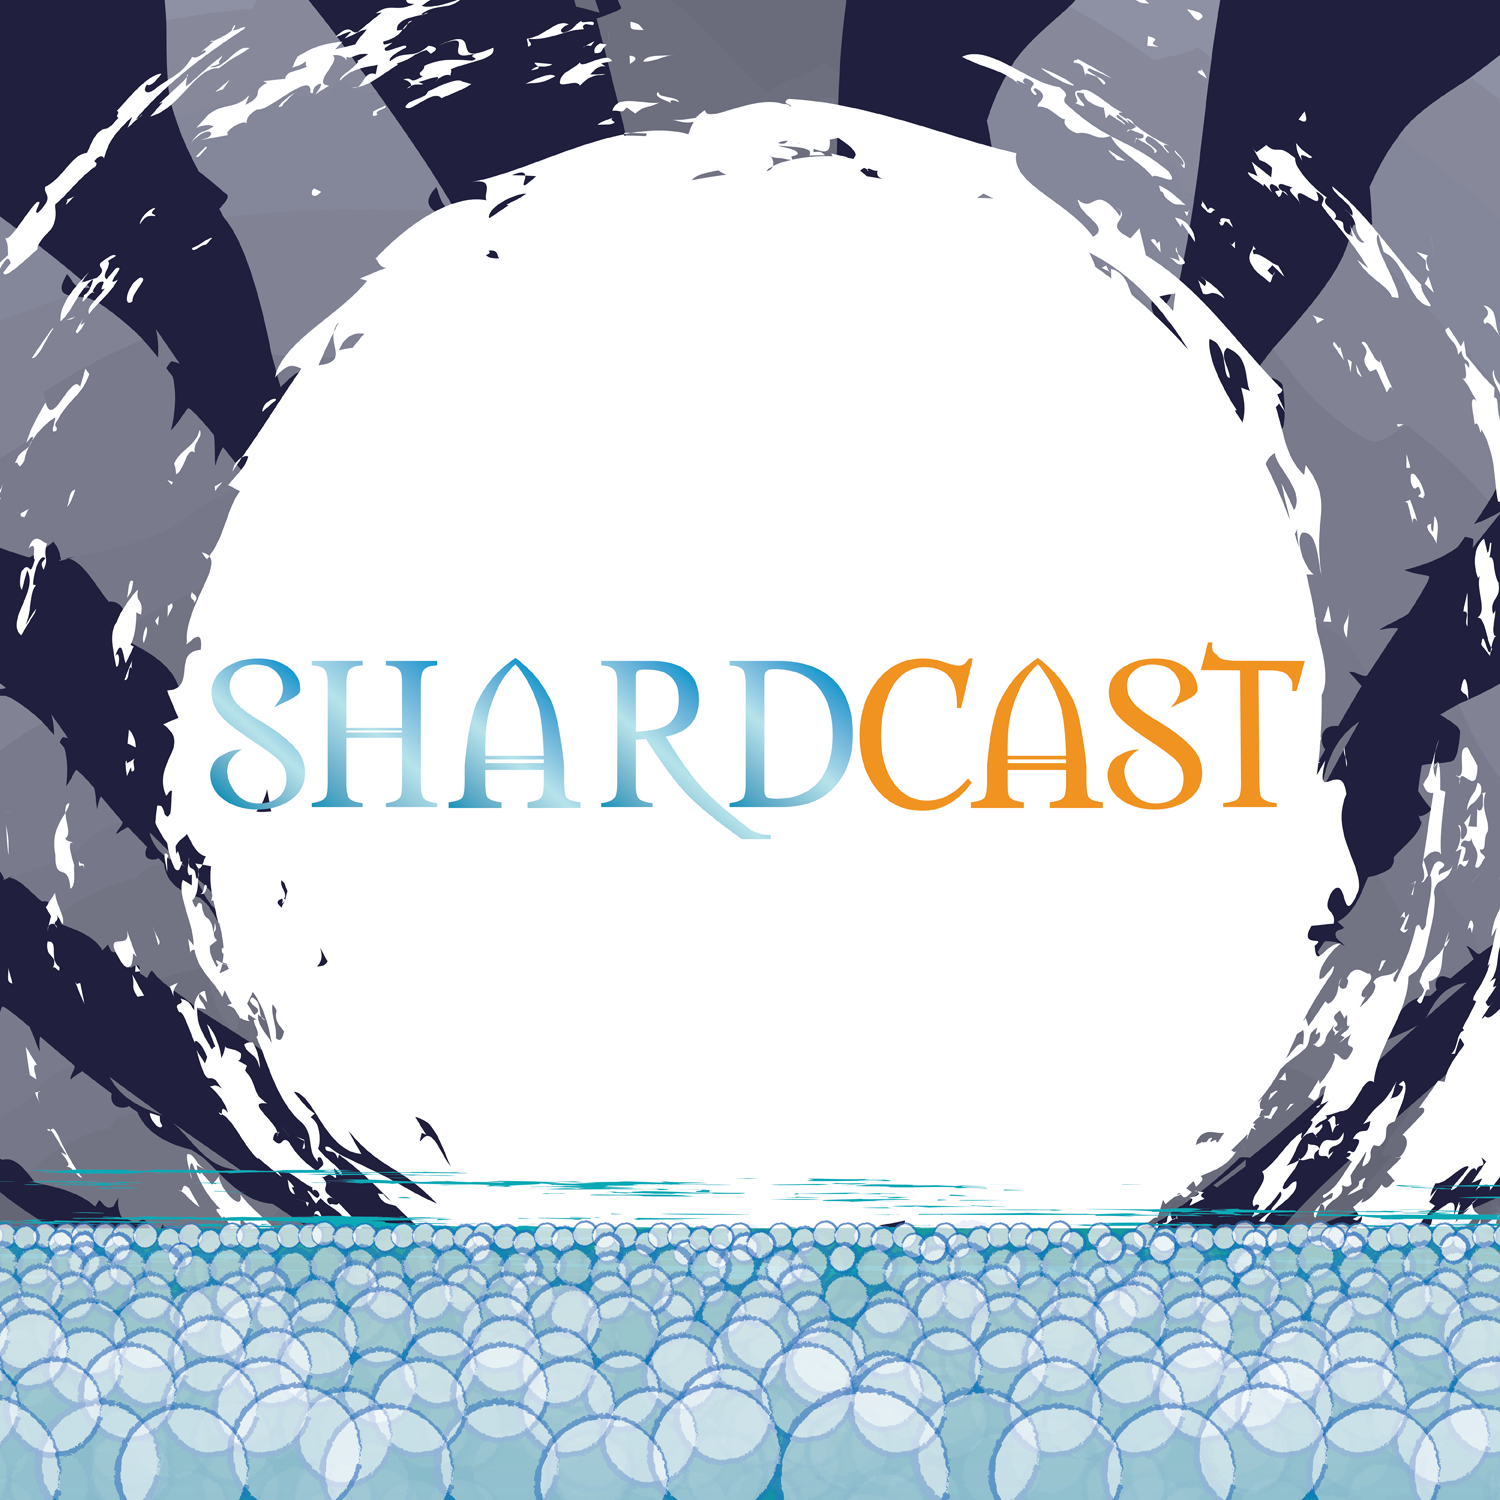 More information about "Shardcast: Lights"